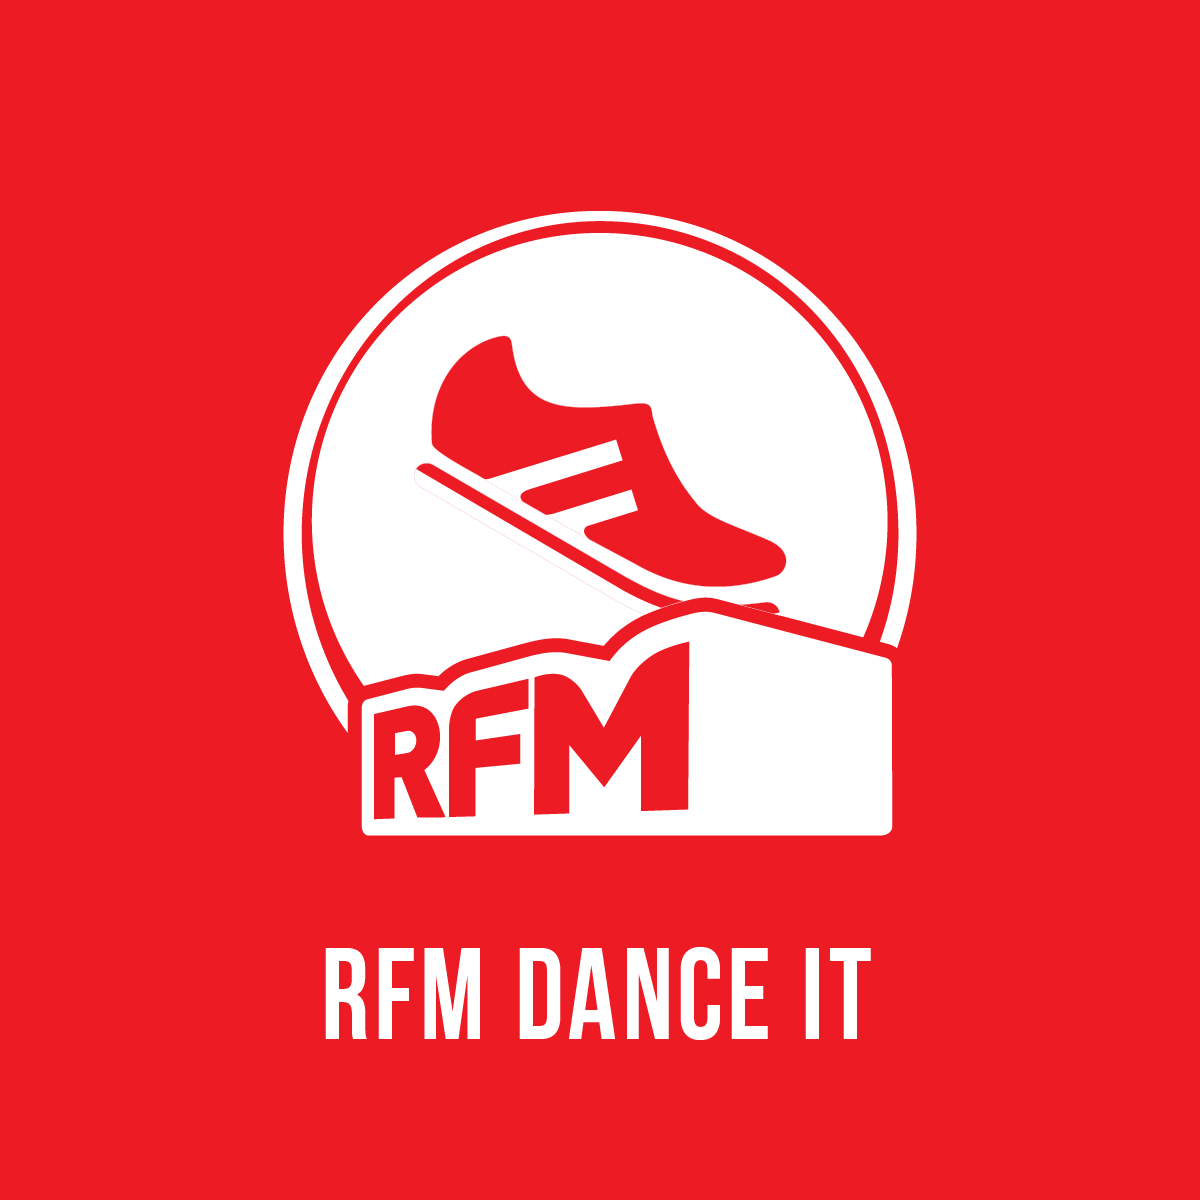 RFM DANCE IT